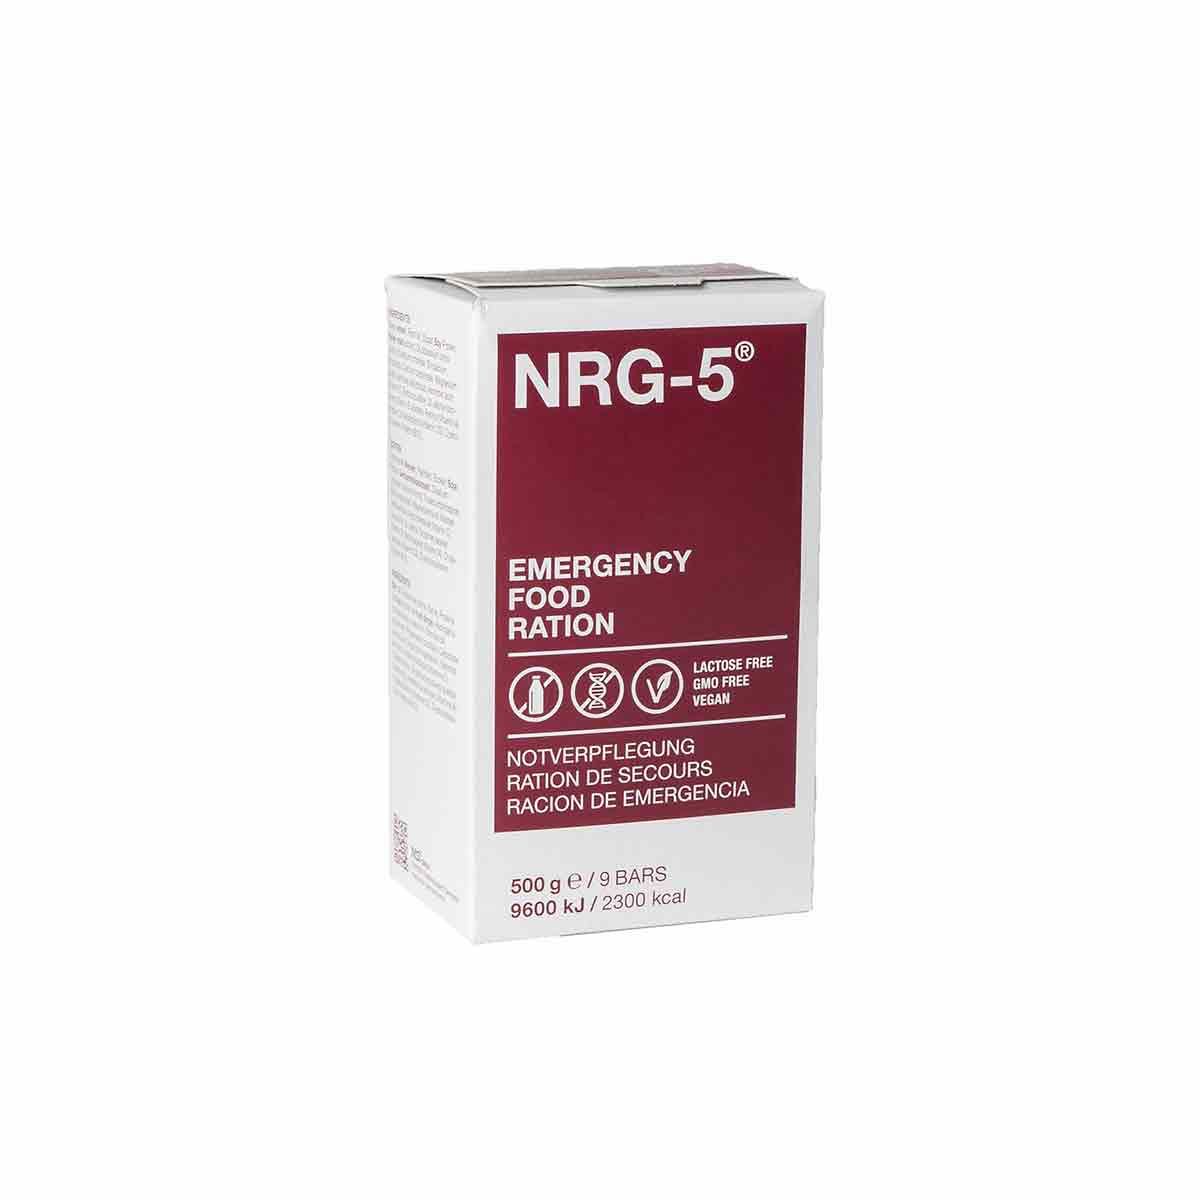 Emergency food ration NRG-5 - 20 years